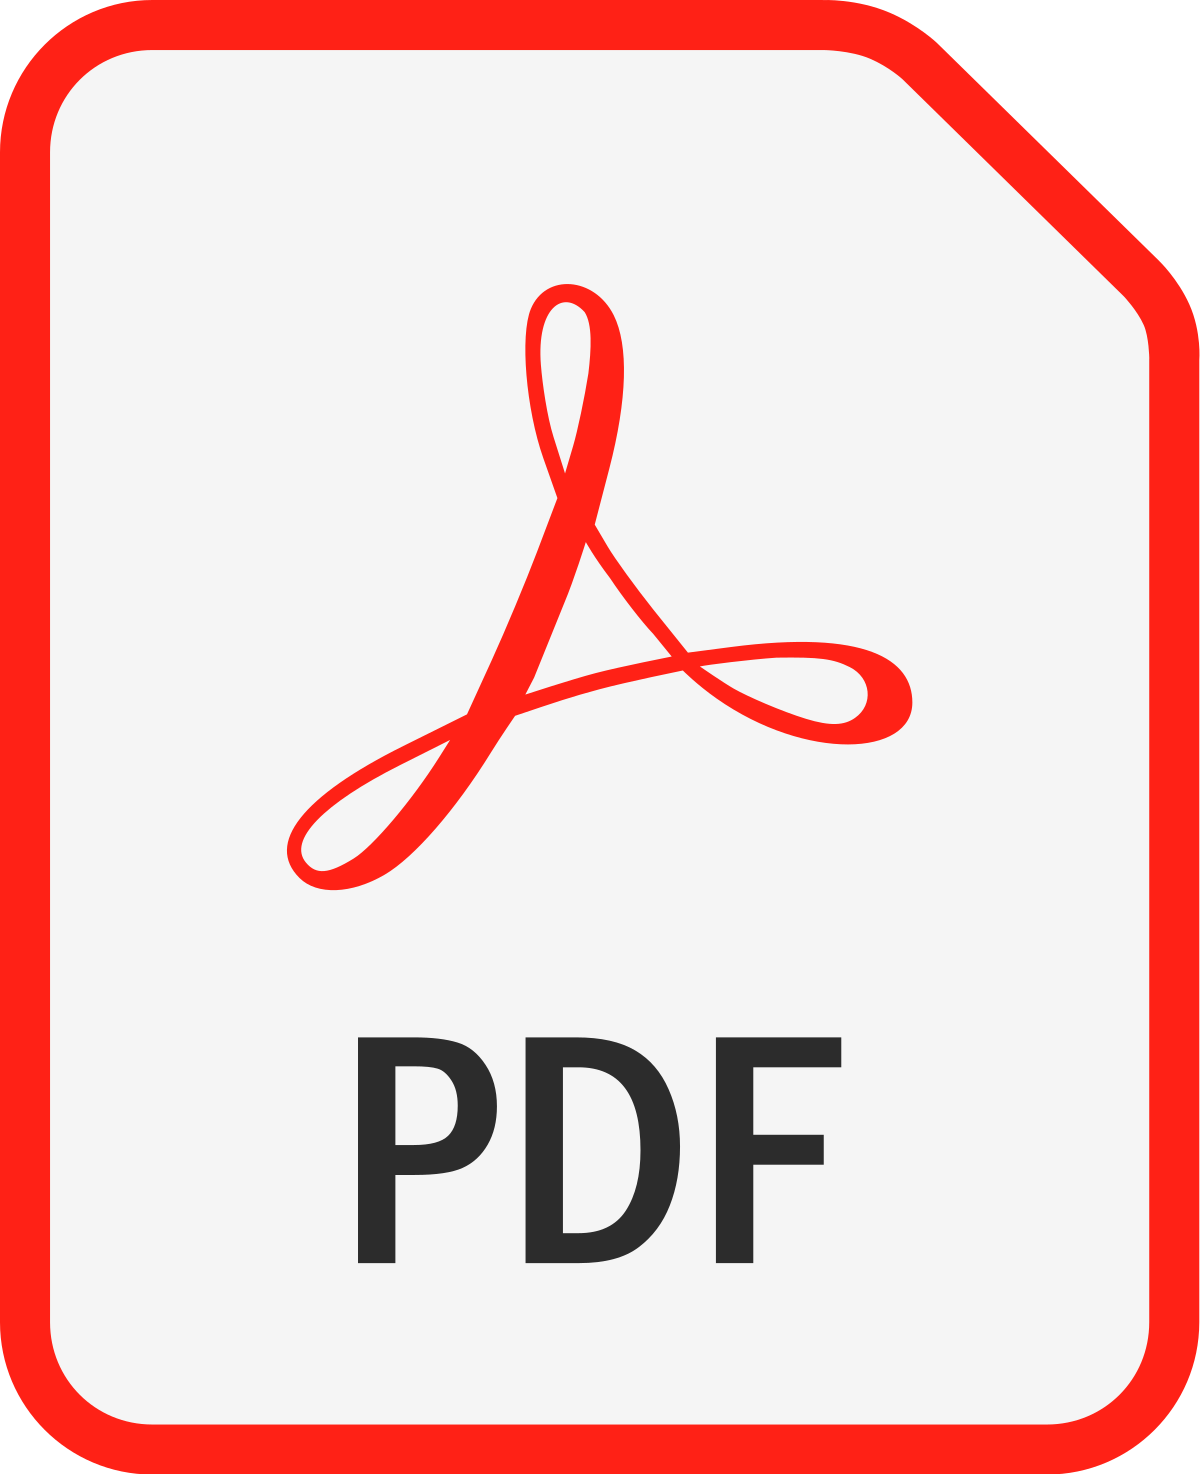 Adobe's Portable Document Format